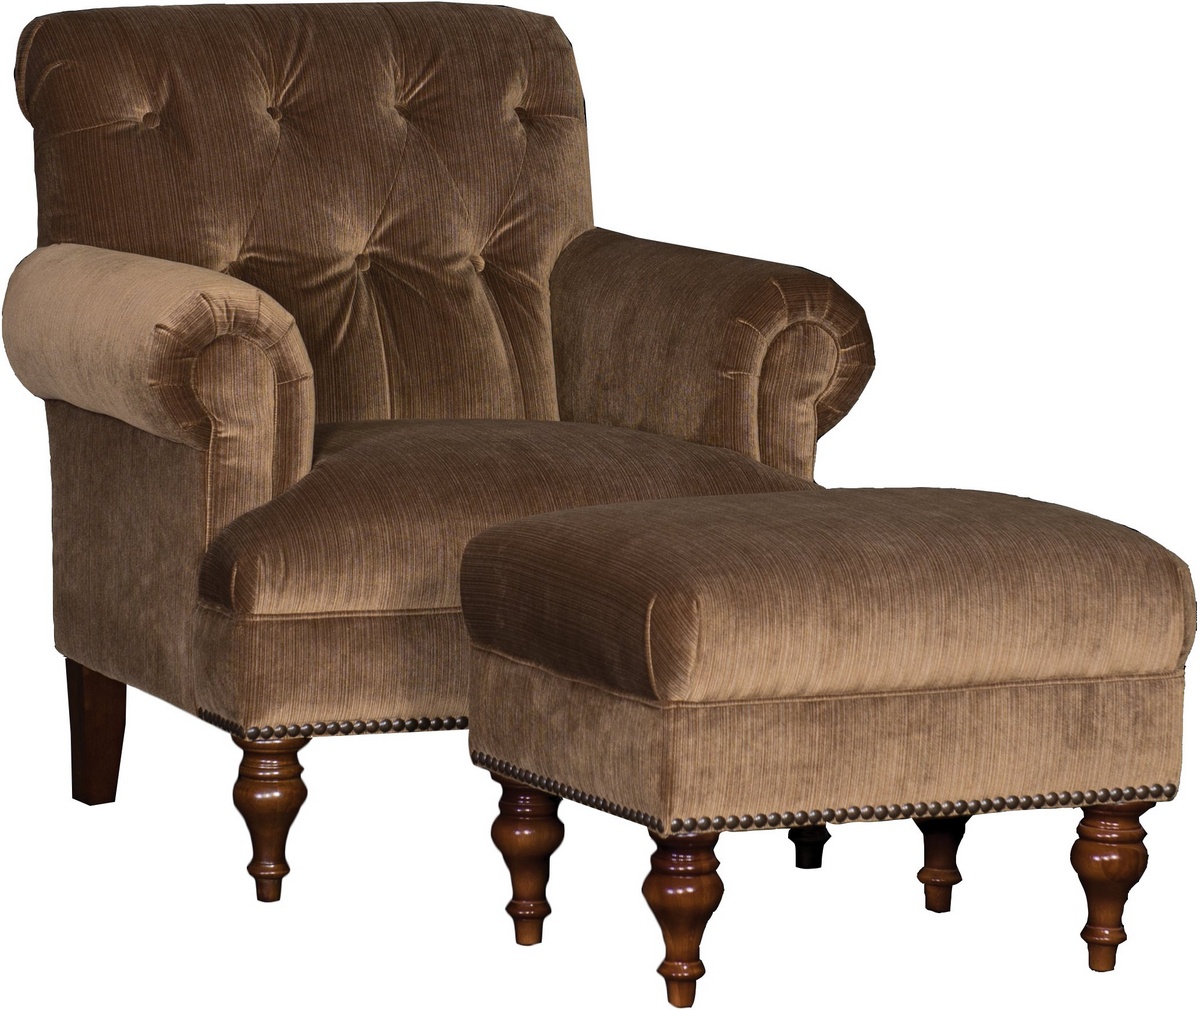 Chelsea Furniture Chair Ottoman Chestnut